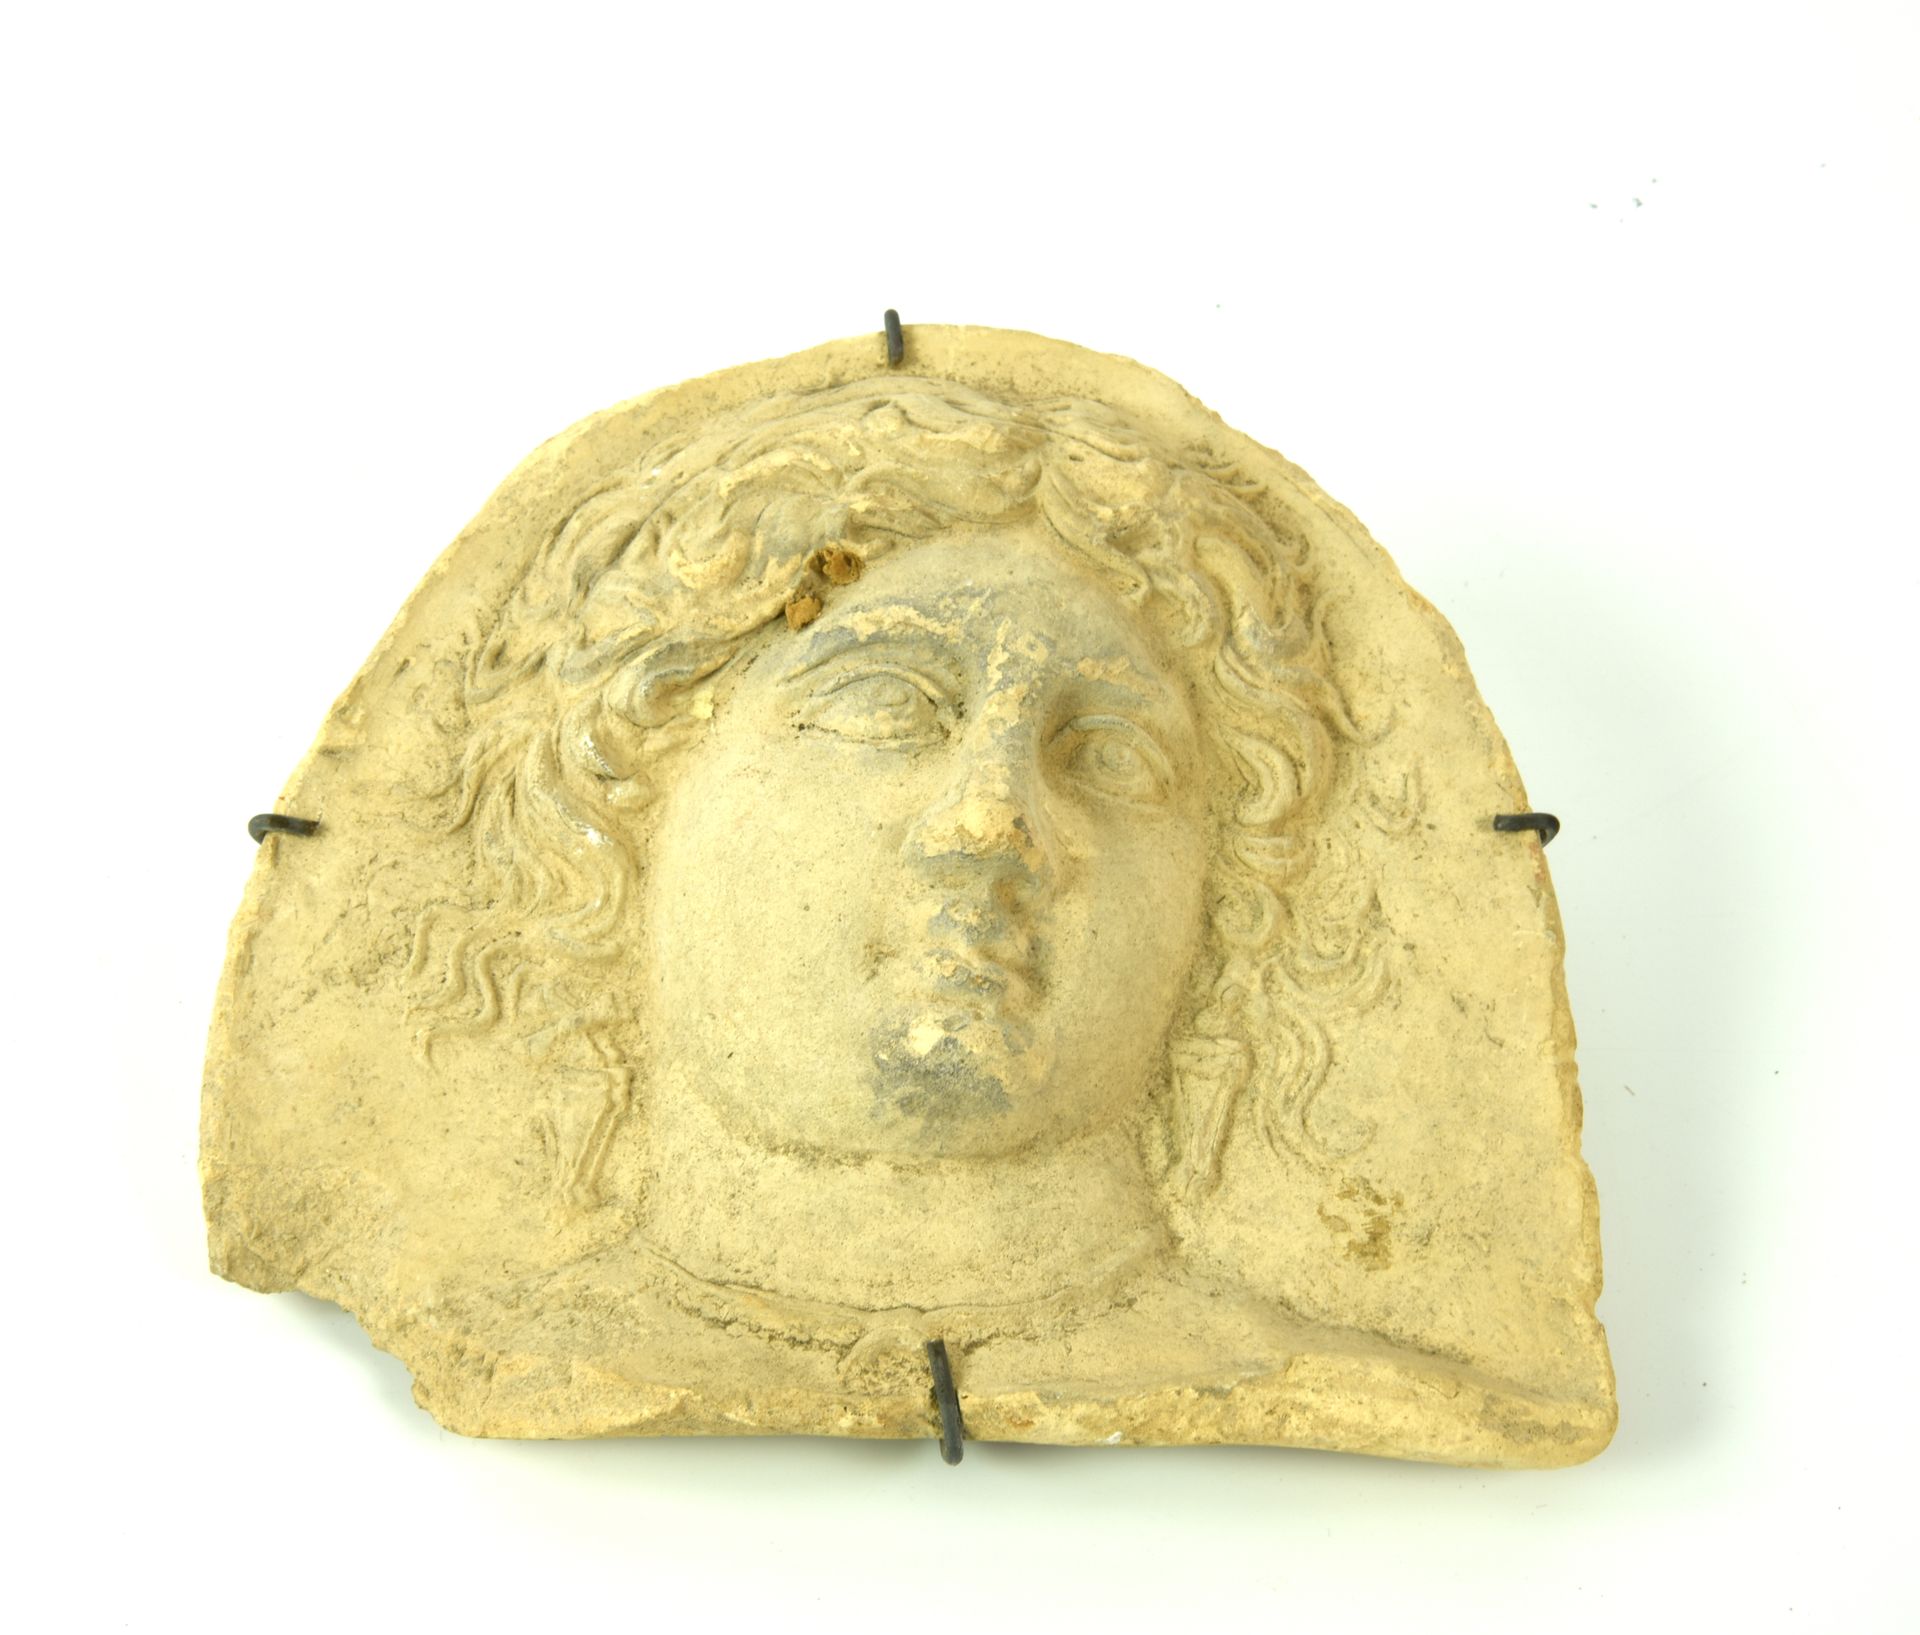 Null 来自塔兰托的Antefix

日期：公元前4世纪。C.

材料和技术：粉红色的纯化粘土，麂皮斑纹，用棍子修饰成型。

拱形前饰，女性半身像面向左侧，浓&hellip;